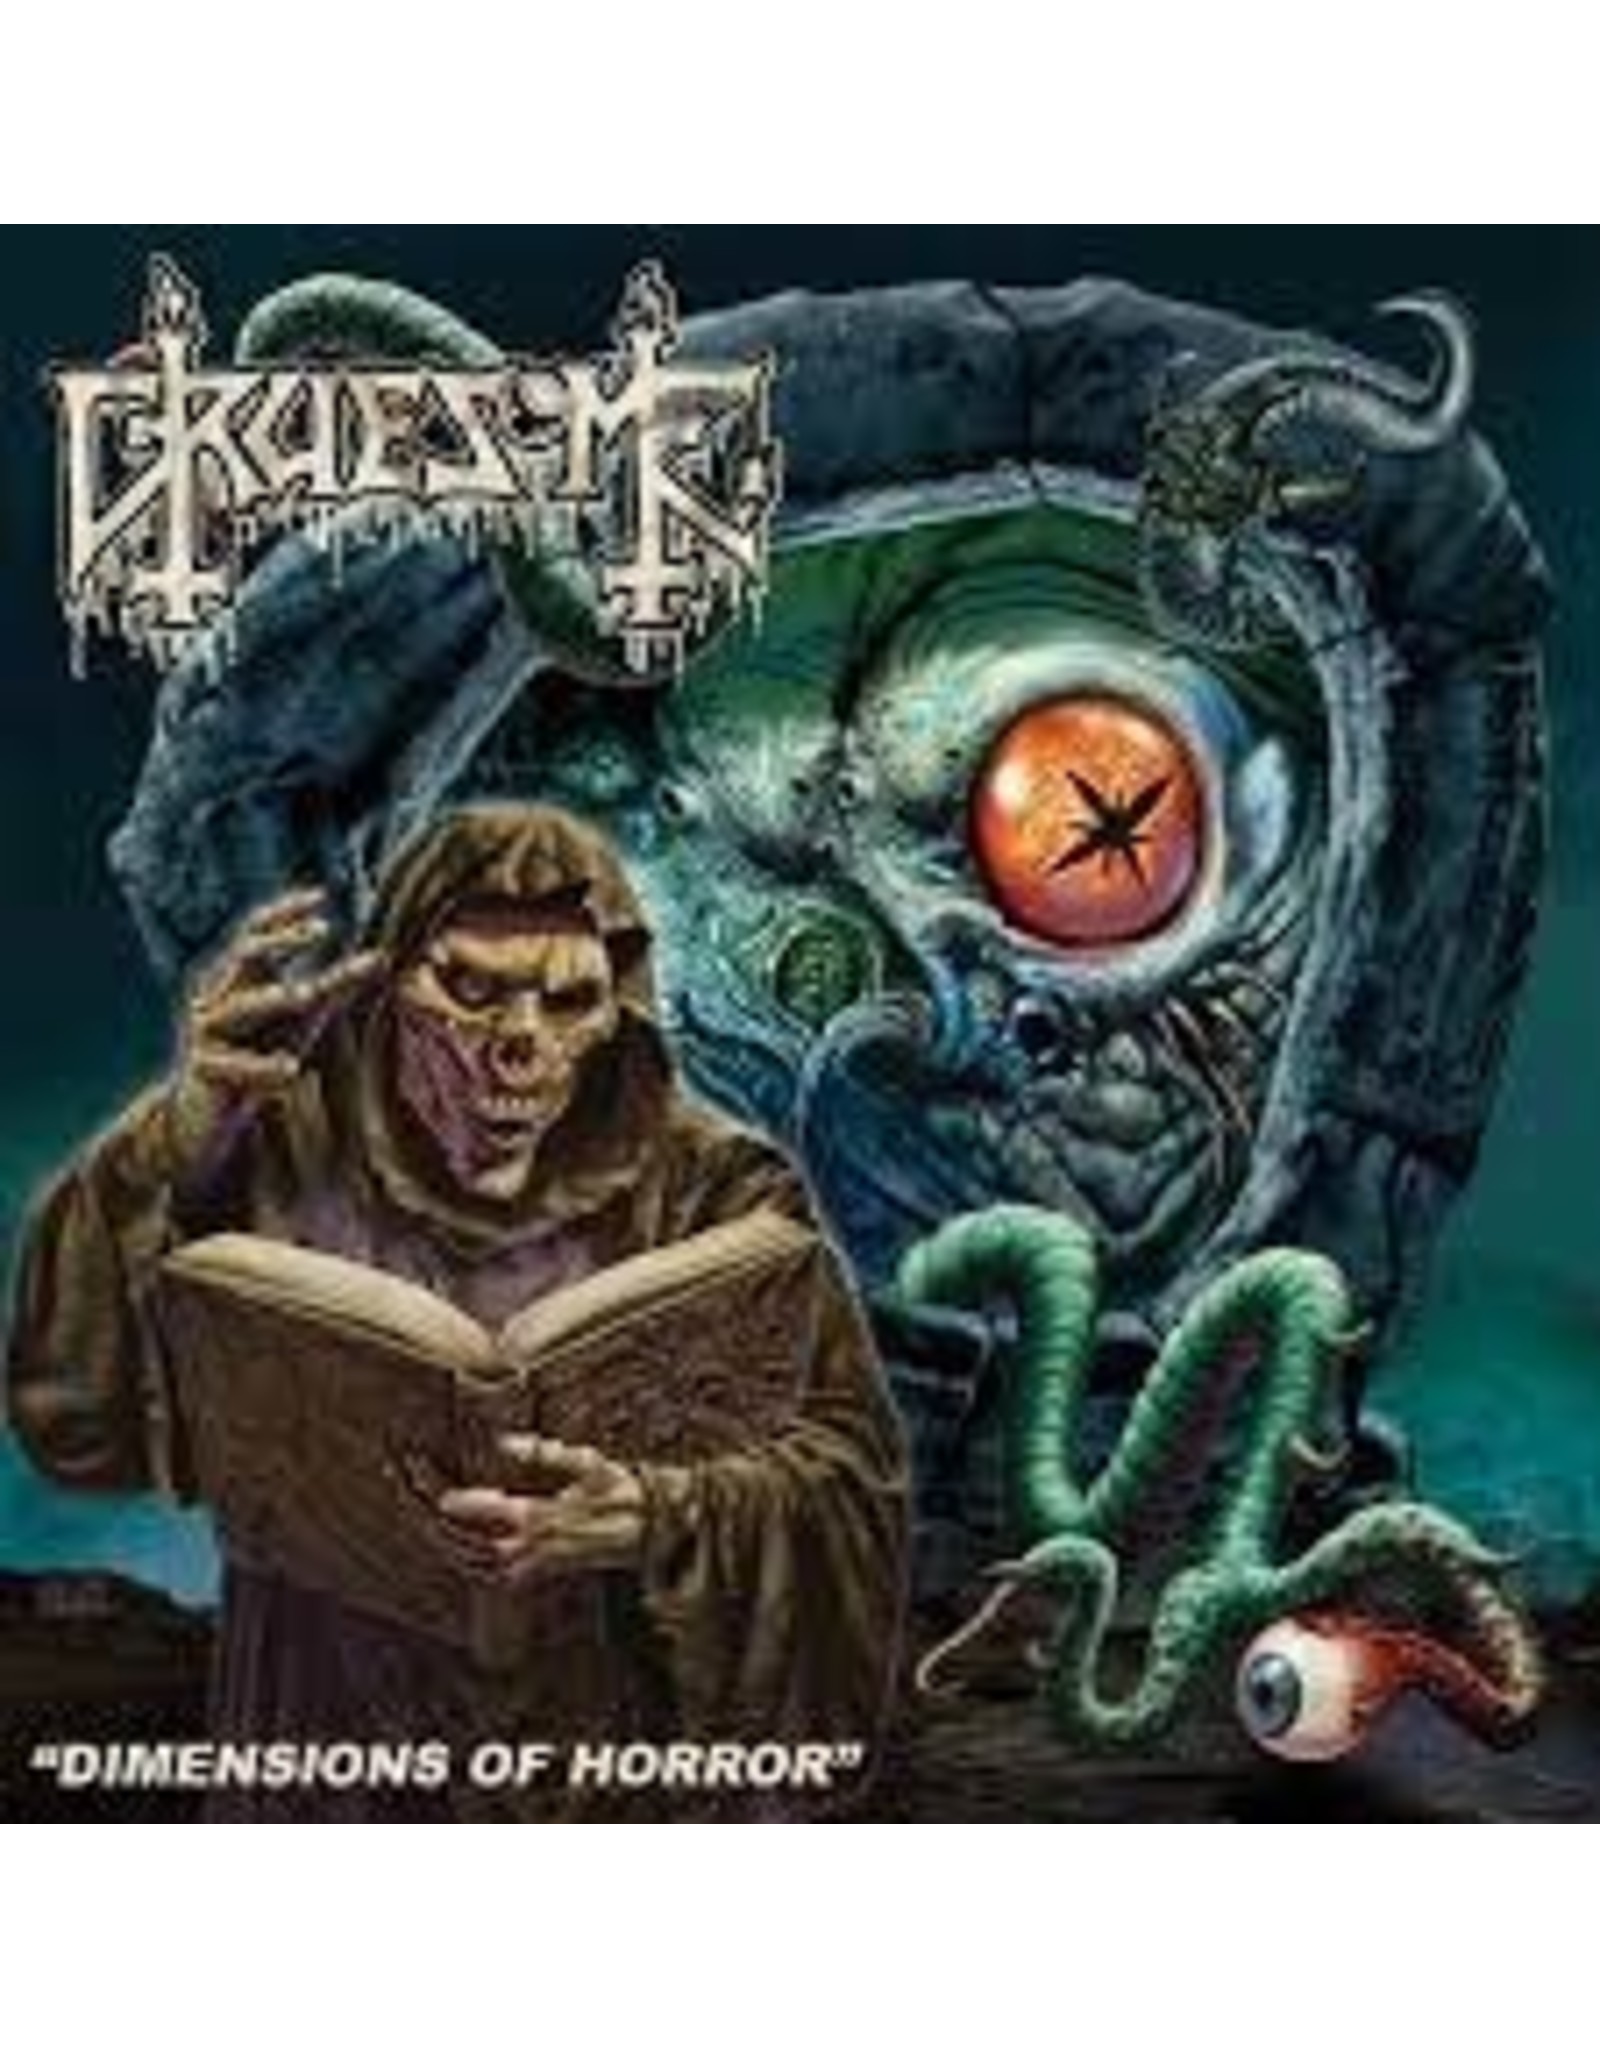 Gruesome - Dimensions of Horror LP (Demon's Eye Ltd. Edition Vinyl)